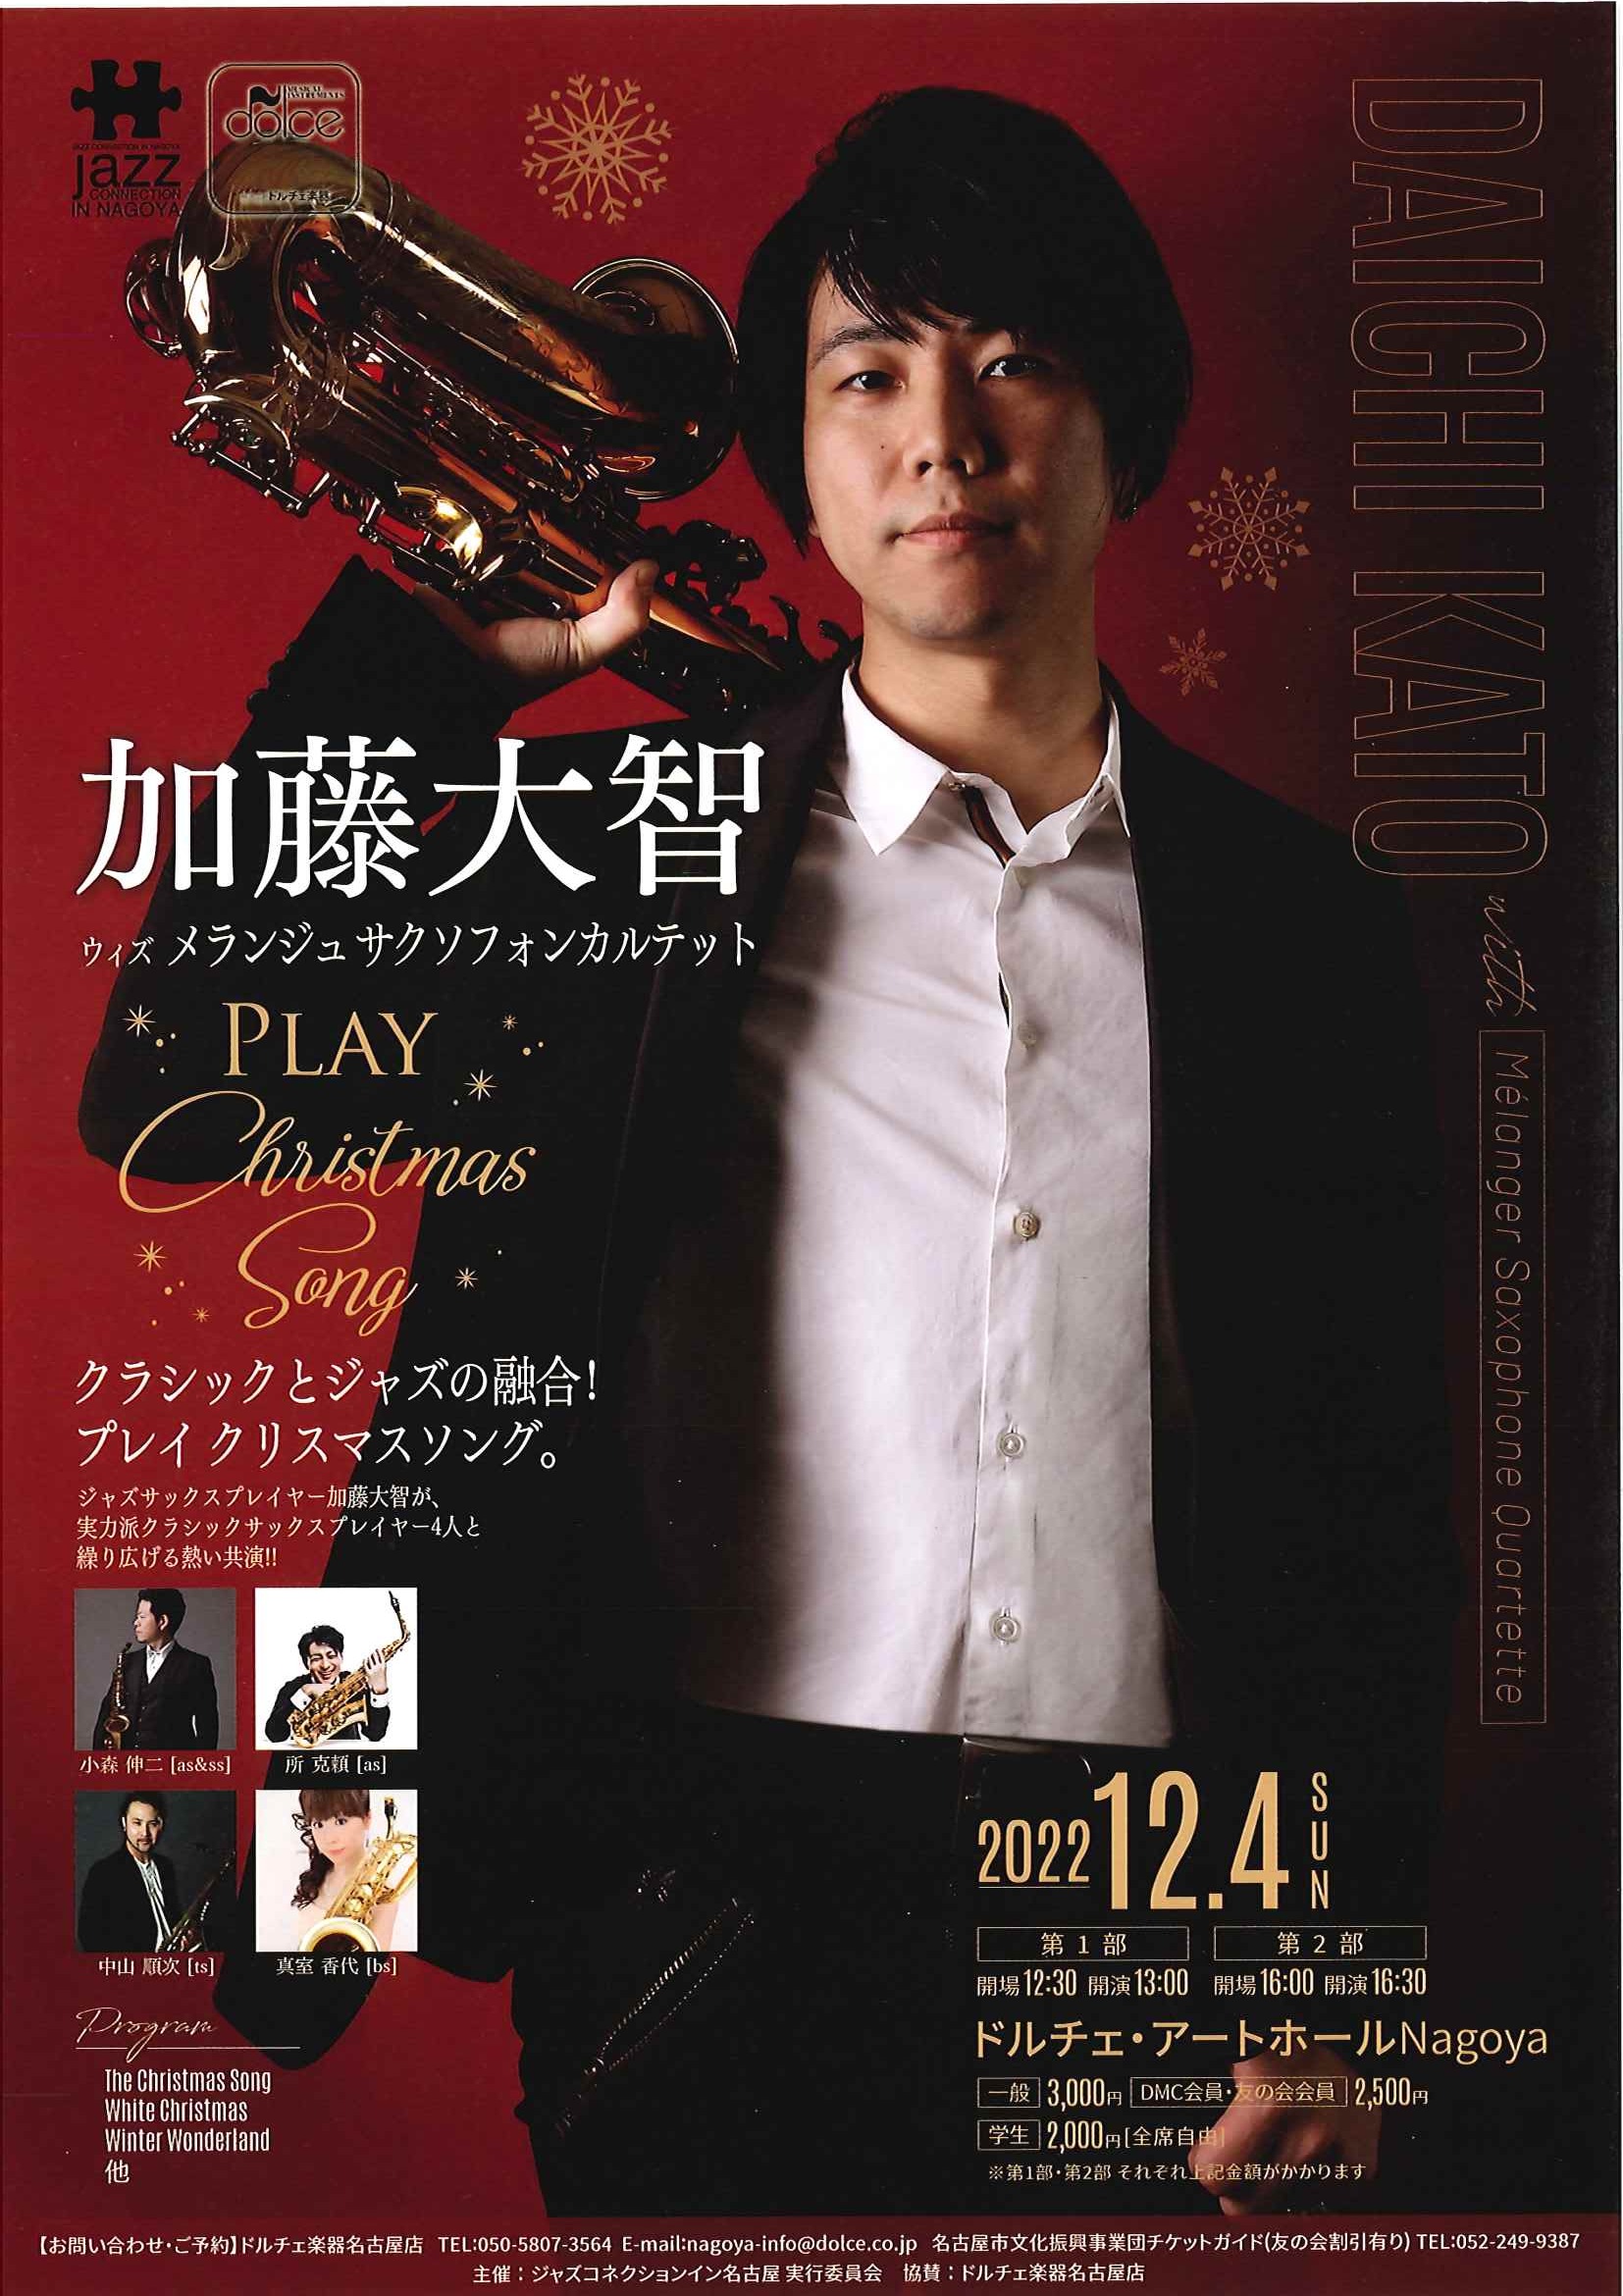 Daichi Kato with Melanger Saxophone Quartetteのチラシ